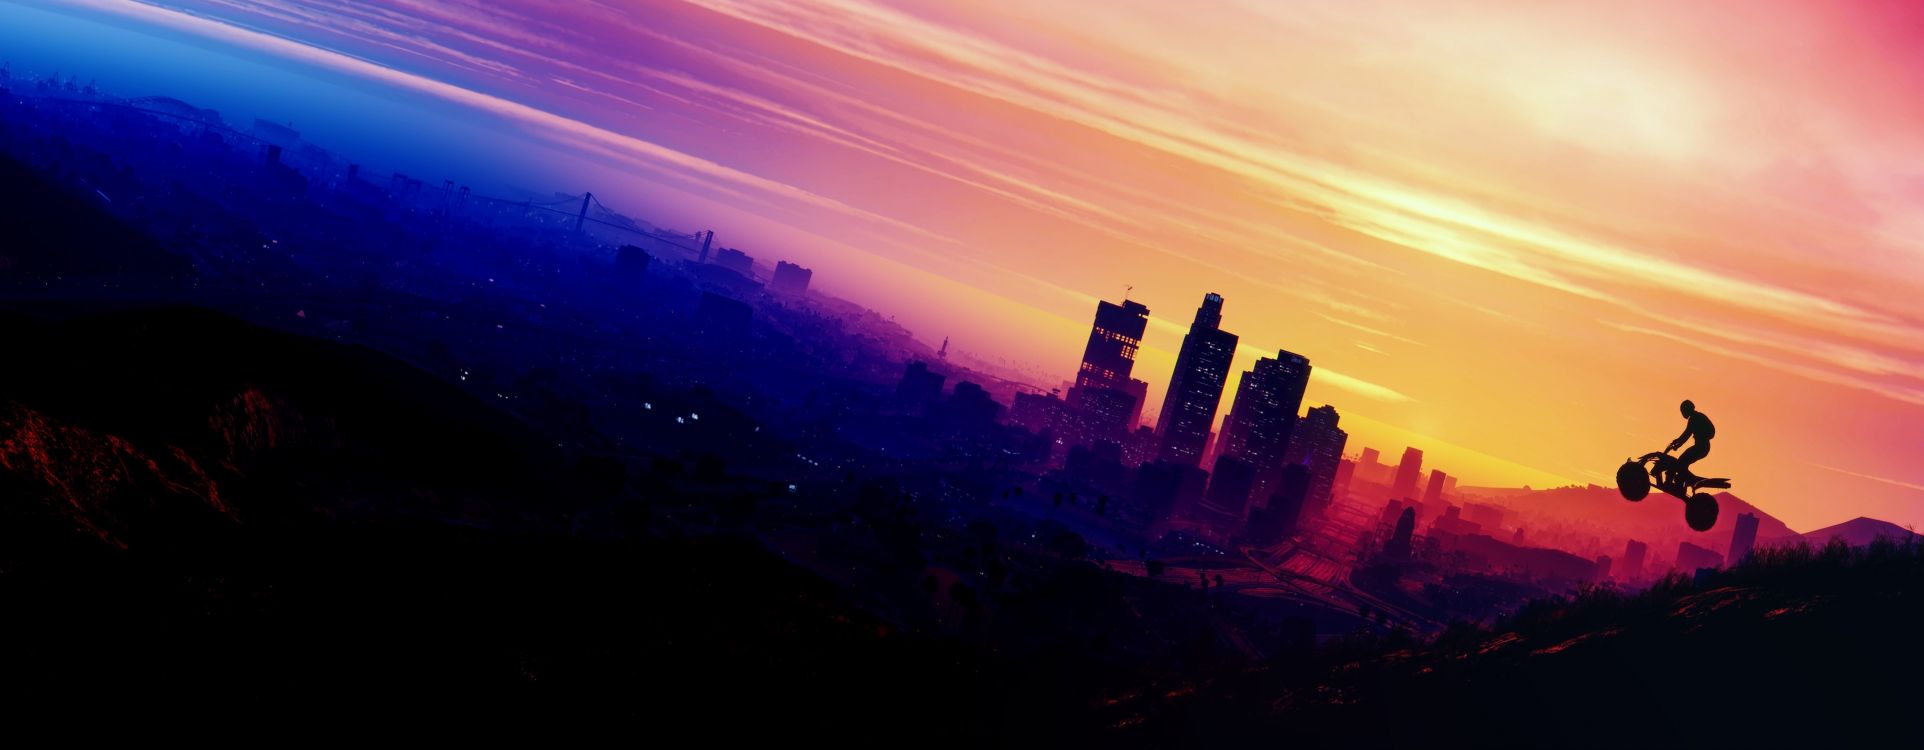 Grand Theft Auto v, Grand Theft Auto San Andreas, Horizon, Afterglow, Les Jeux Vidéo. Wallpaper in 4935x1923 Resolution